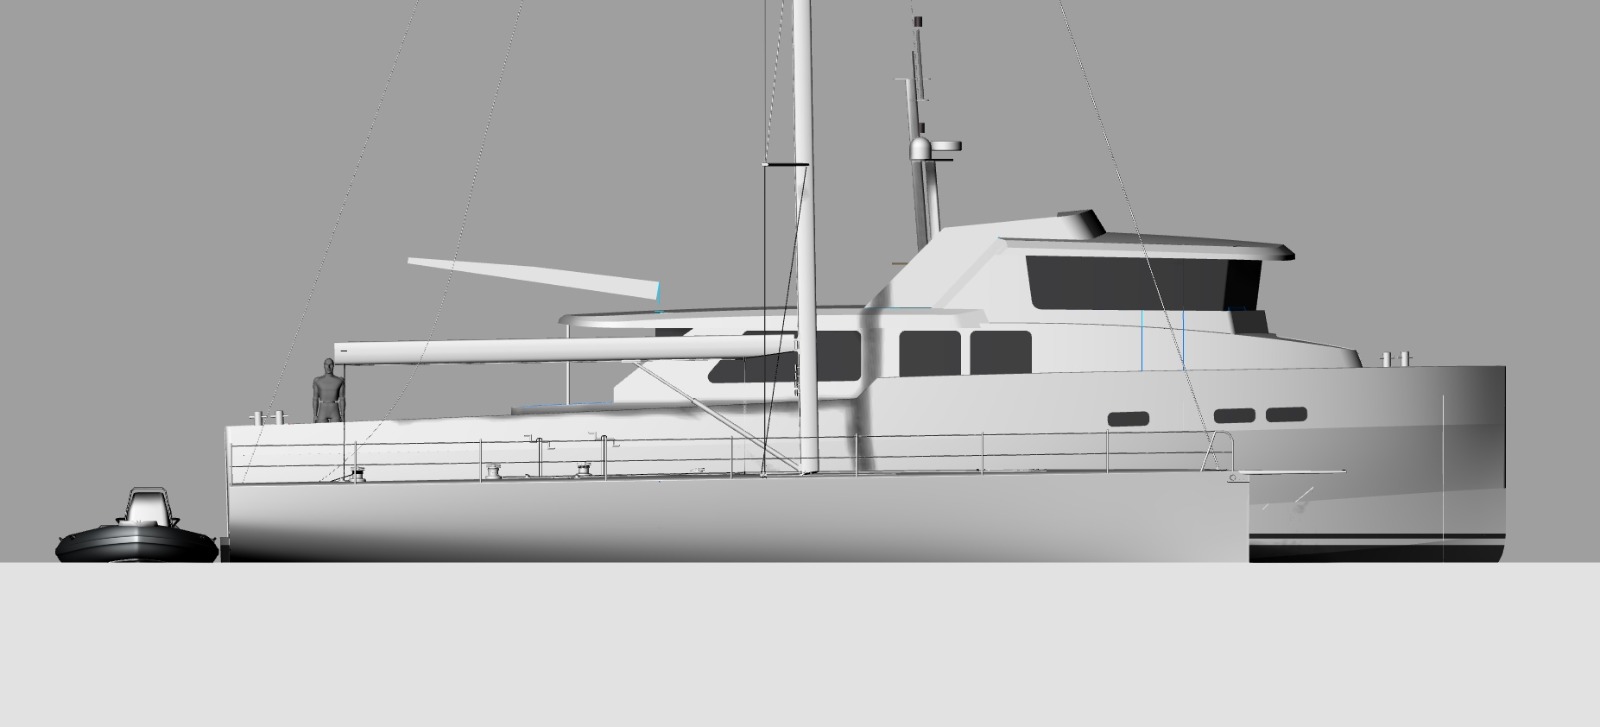 Globemaster Yachts By Willem Nieland Design